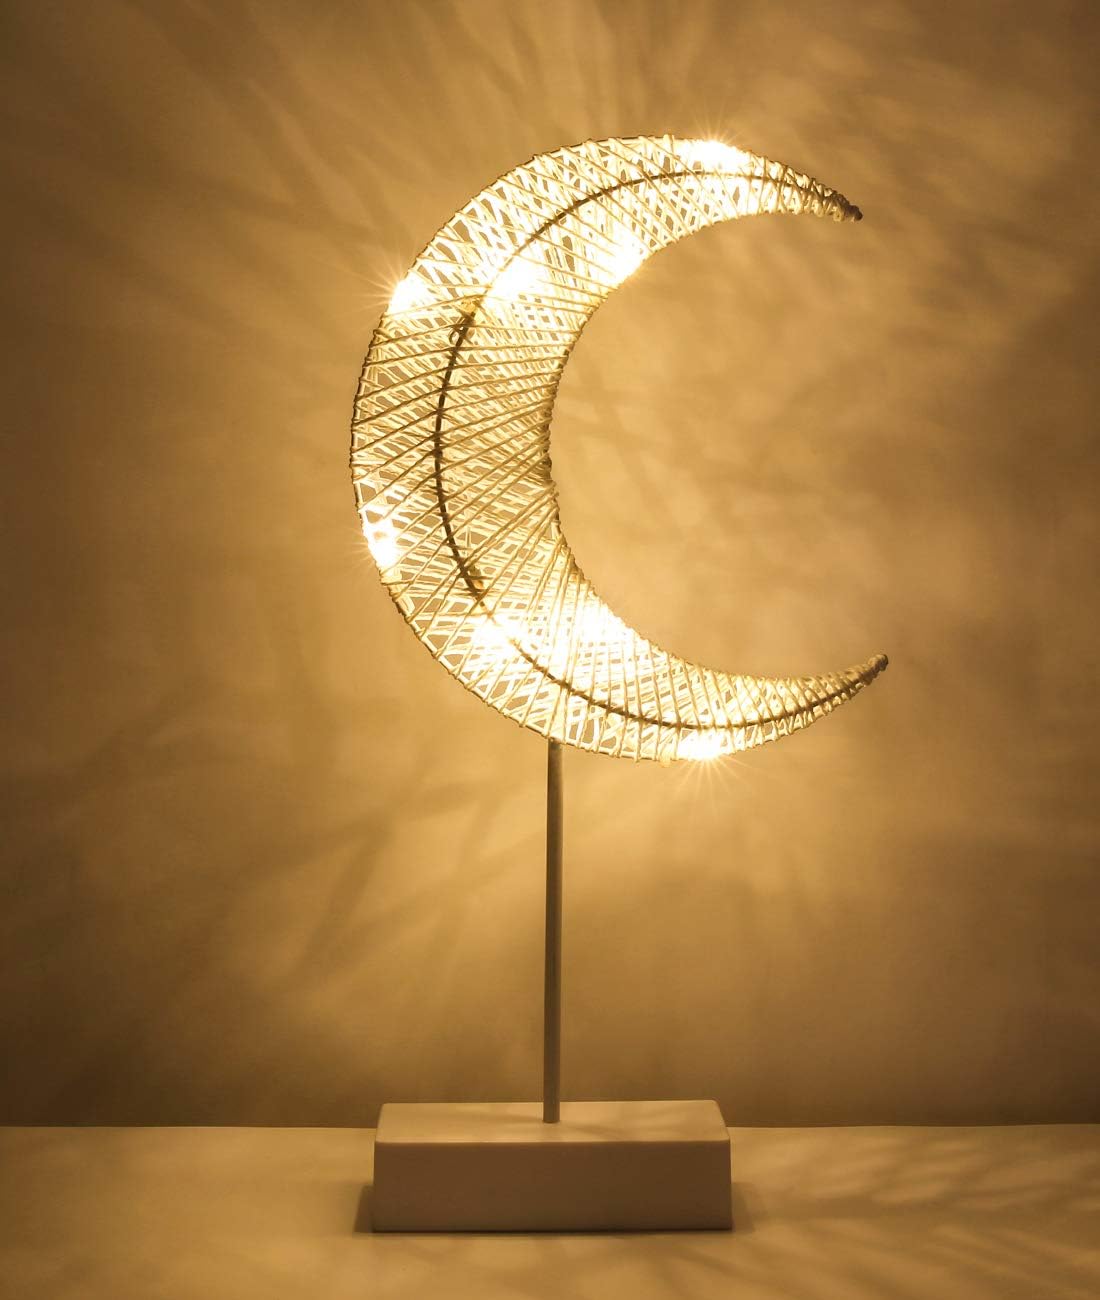 Lewondr Decorative Table Lamp, Battery Powered Christmas Moon